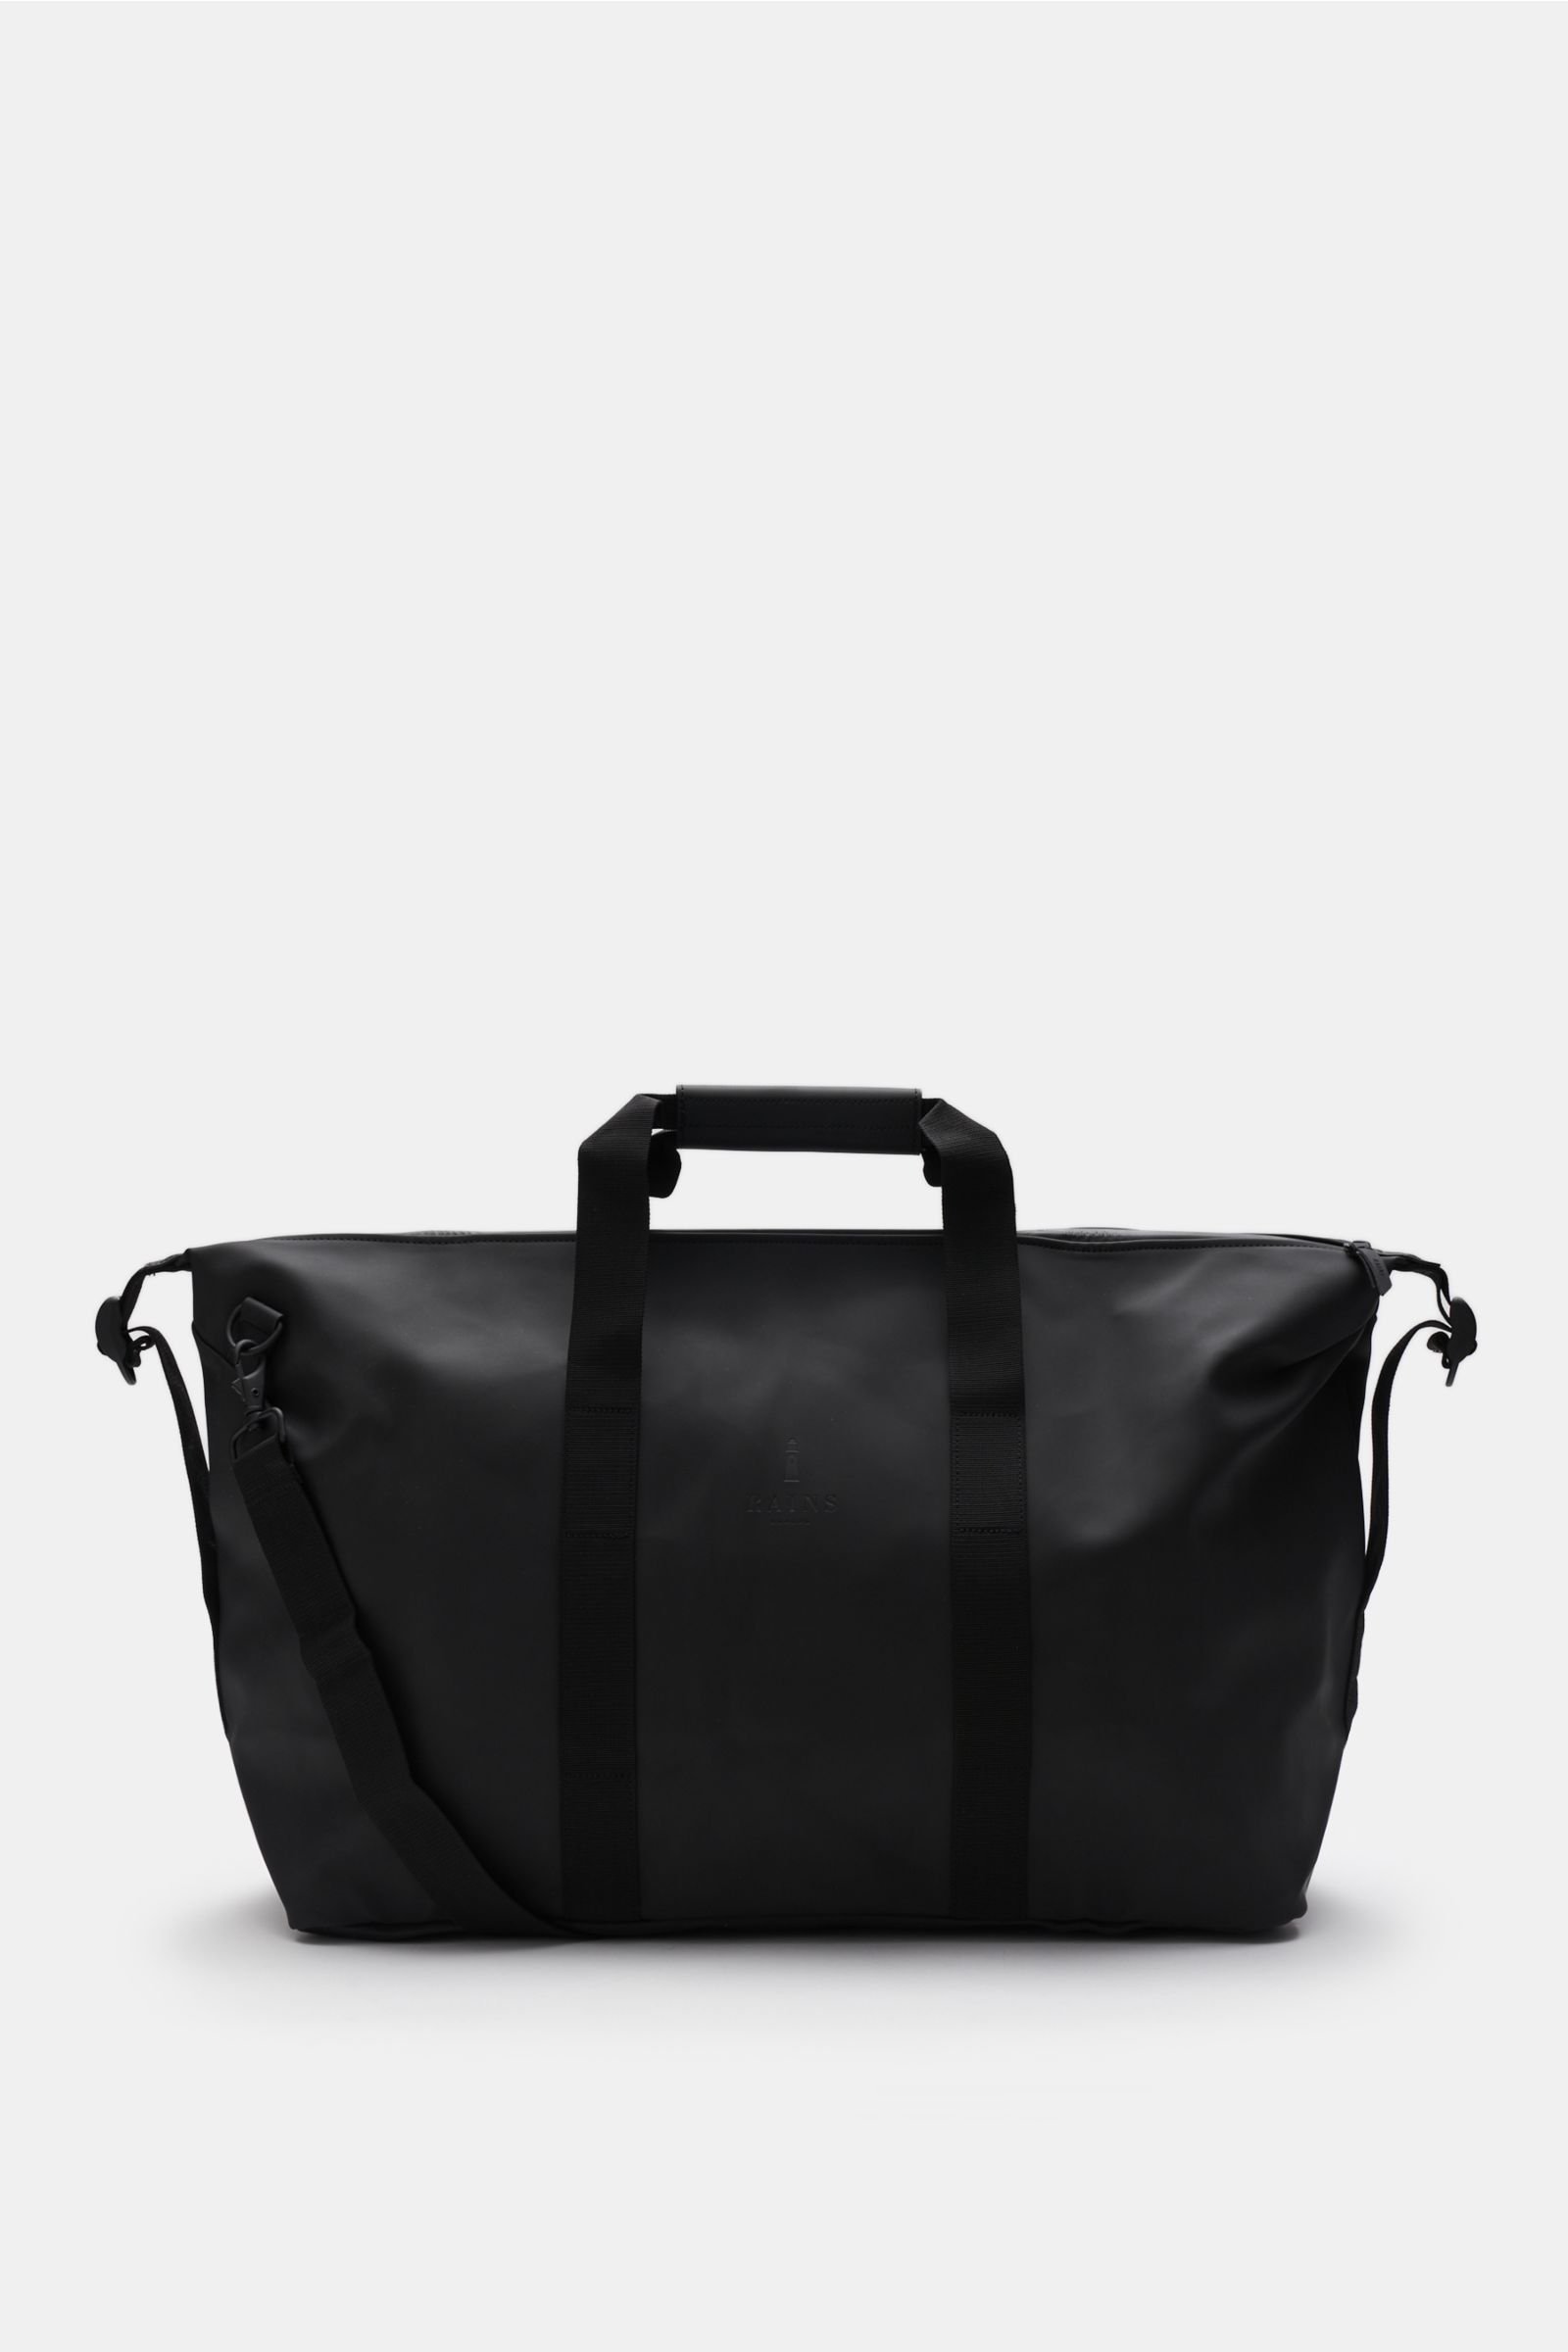 RAINS travel bag 'Weekend Bag' black | BRAUN Hamburg